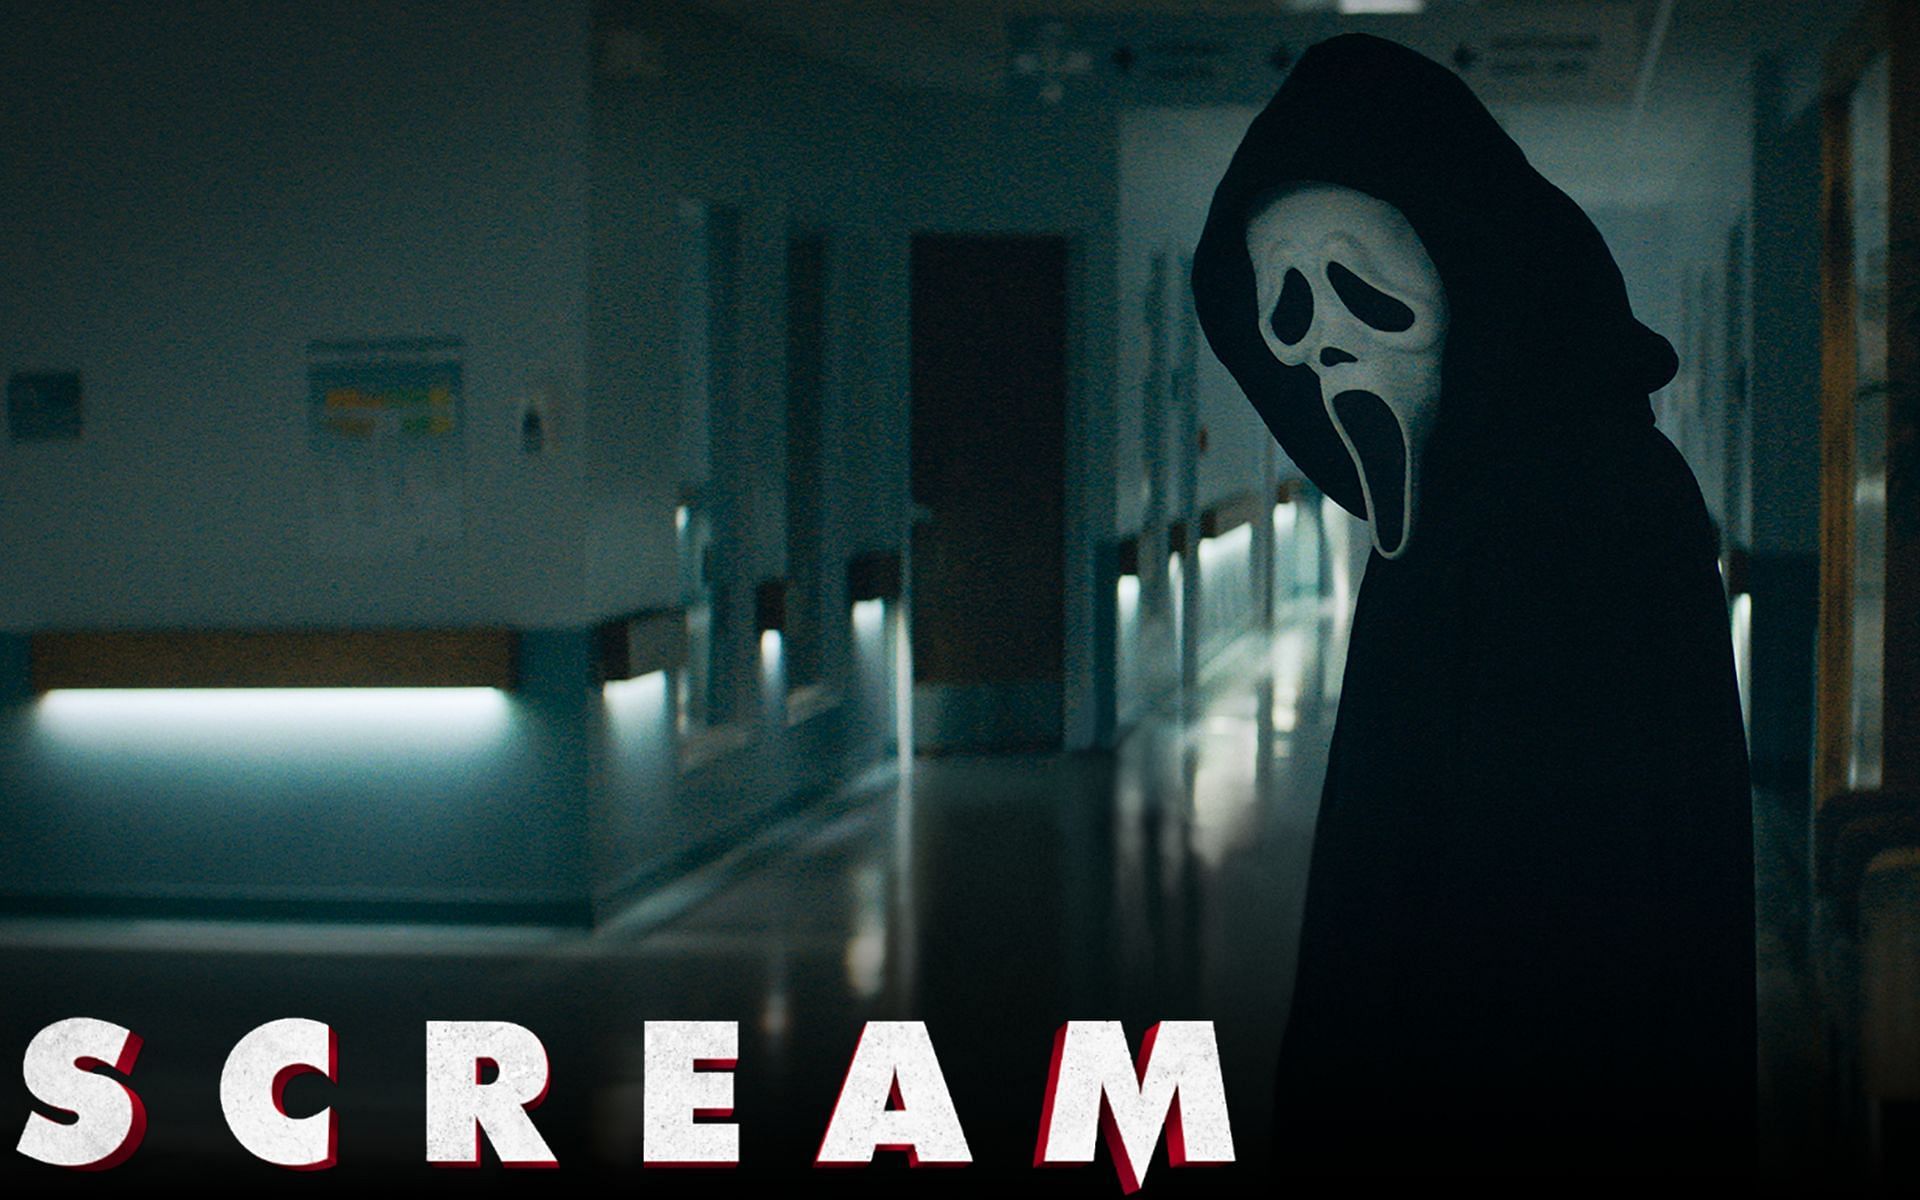 Scream imdb